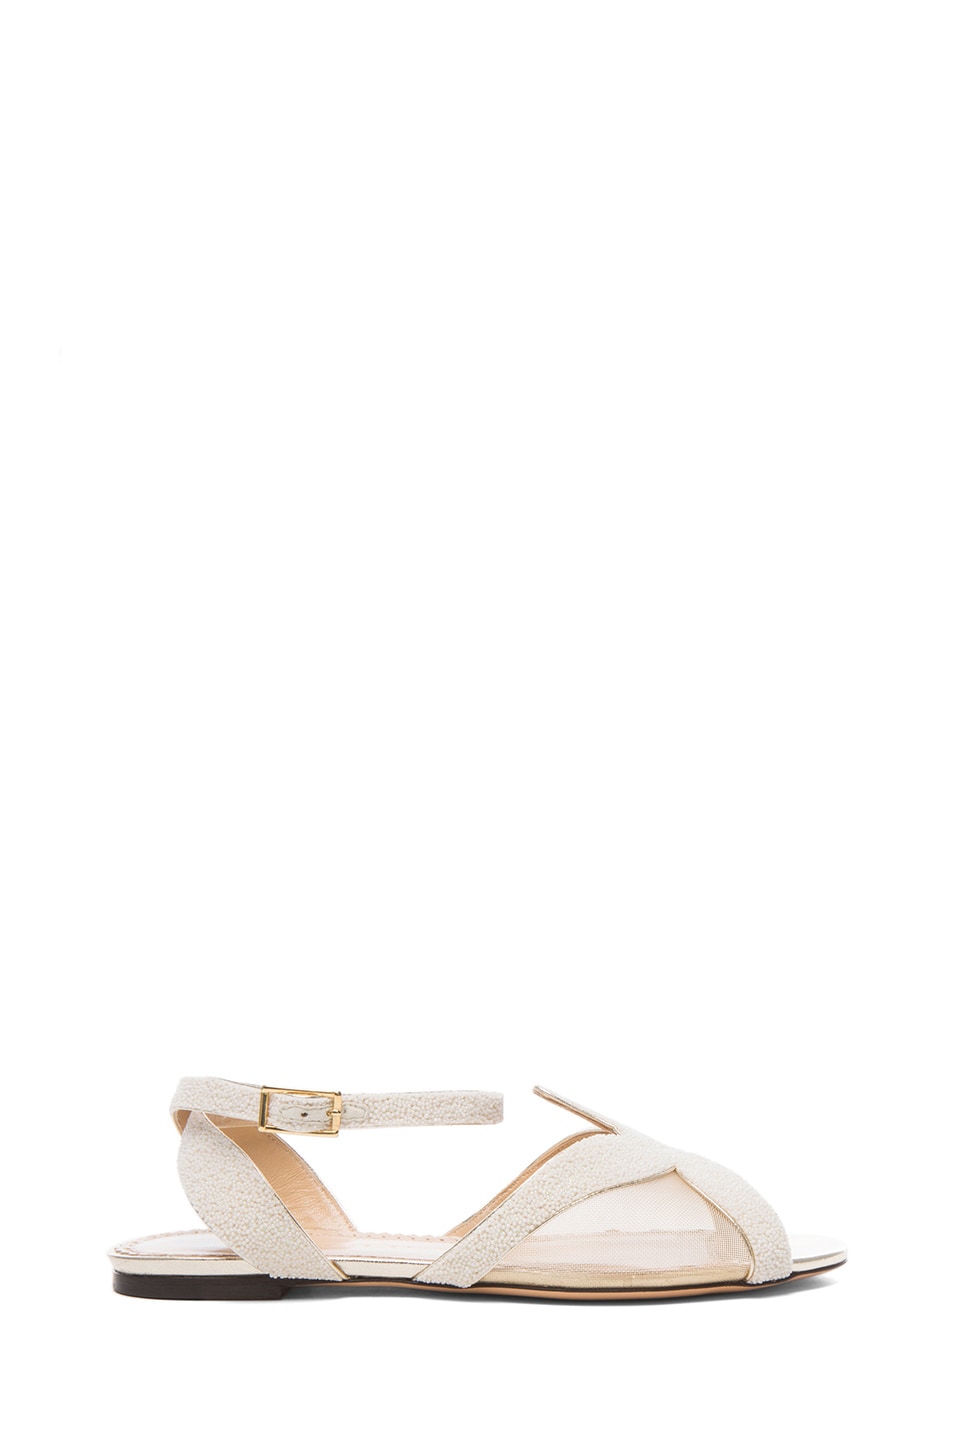 Charlotte Olympia Sandy Glitter & Bead Embellished Sandals in Pearl | FWRD